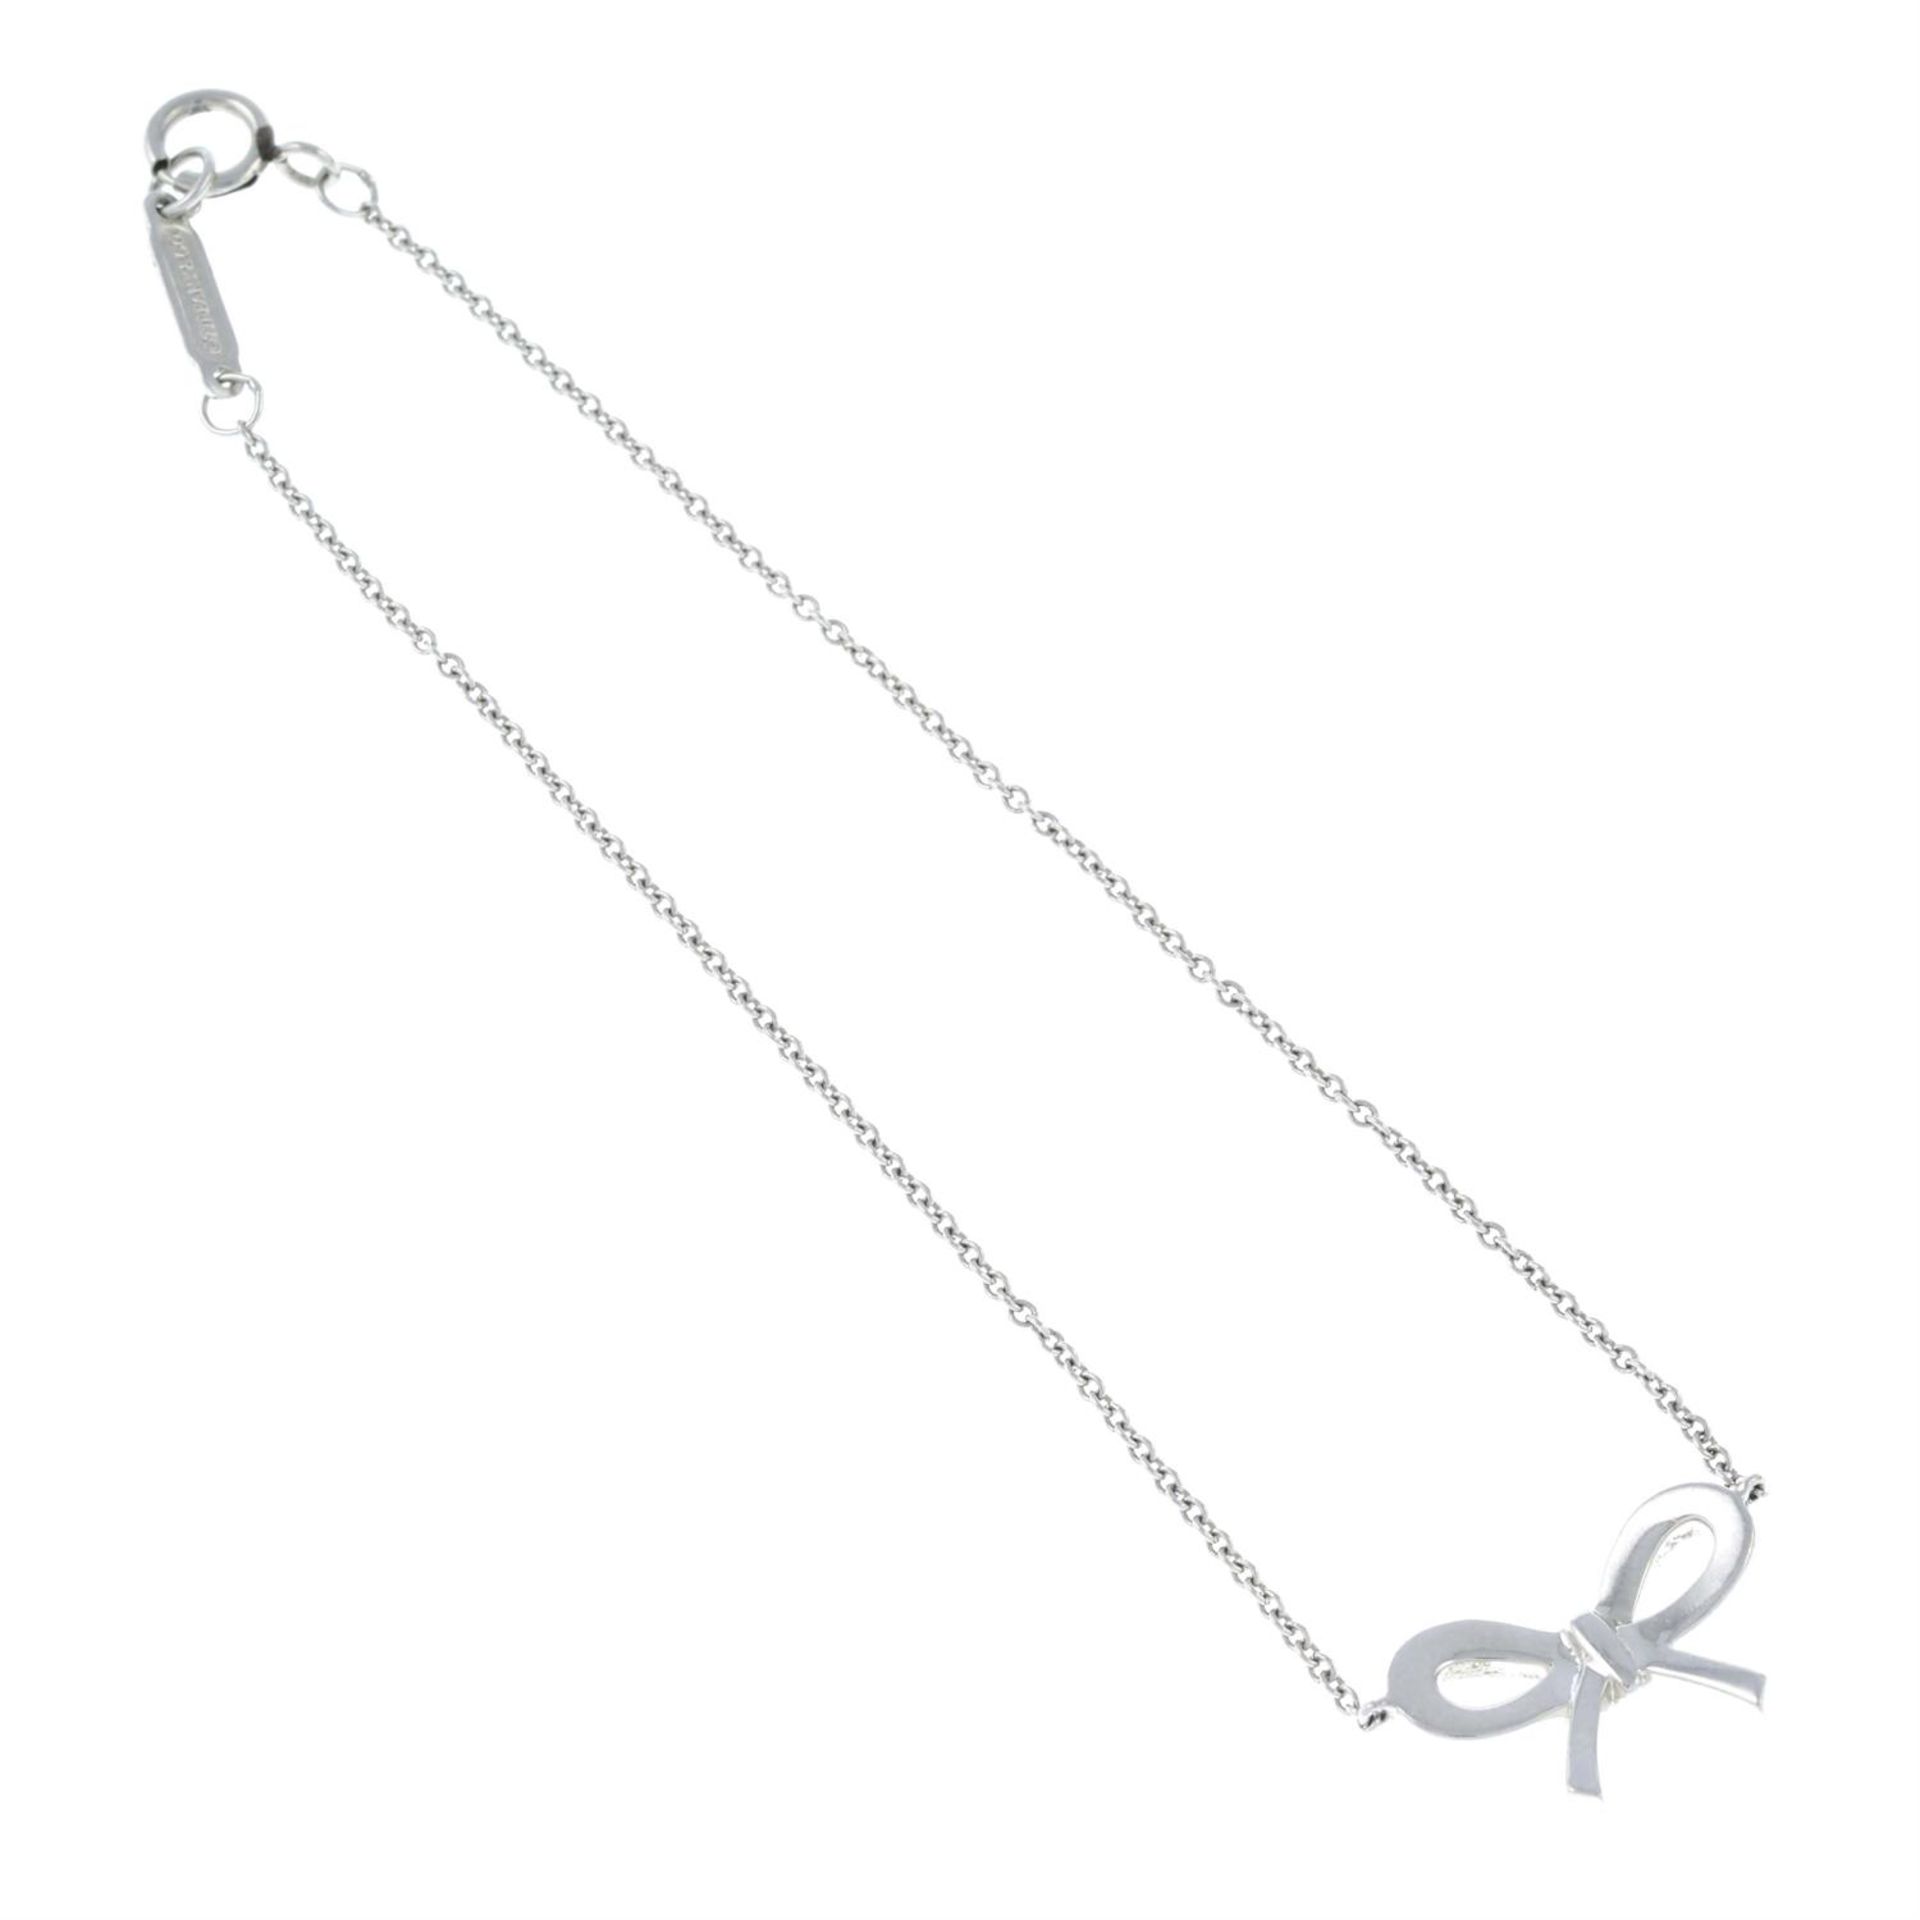 A brilliant-cut diamond bow bracelet, by Tiffany & Co. - Image 2 of 3